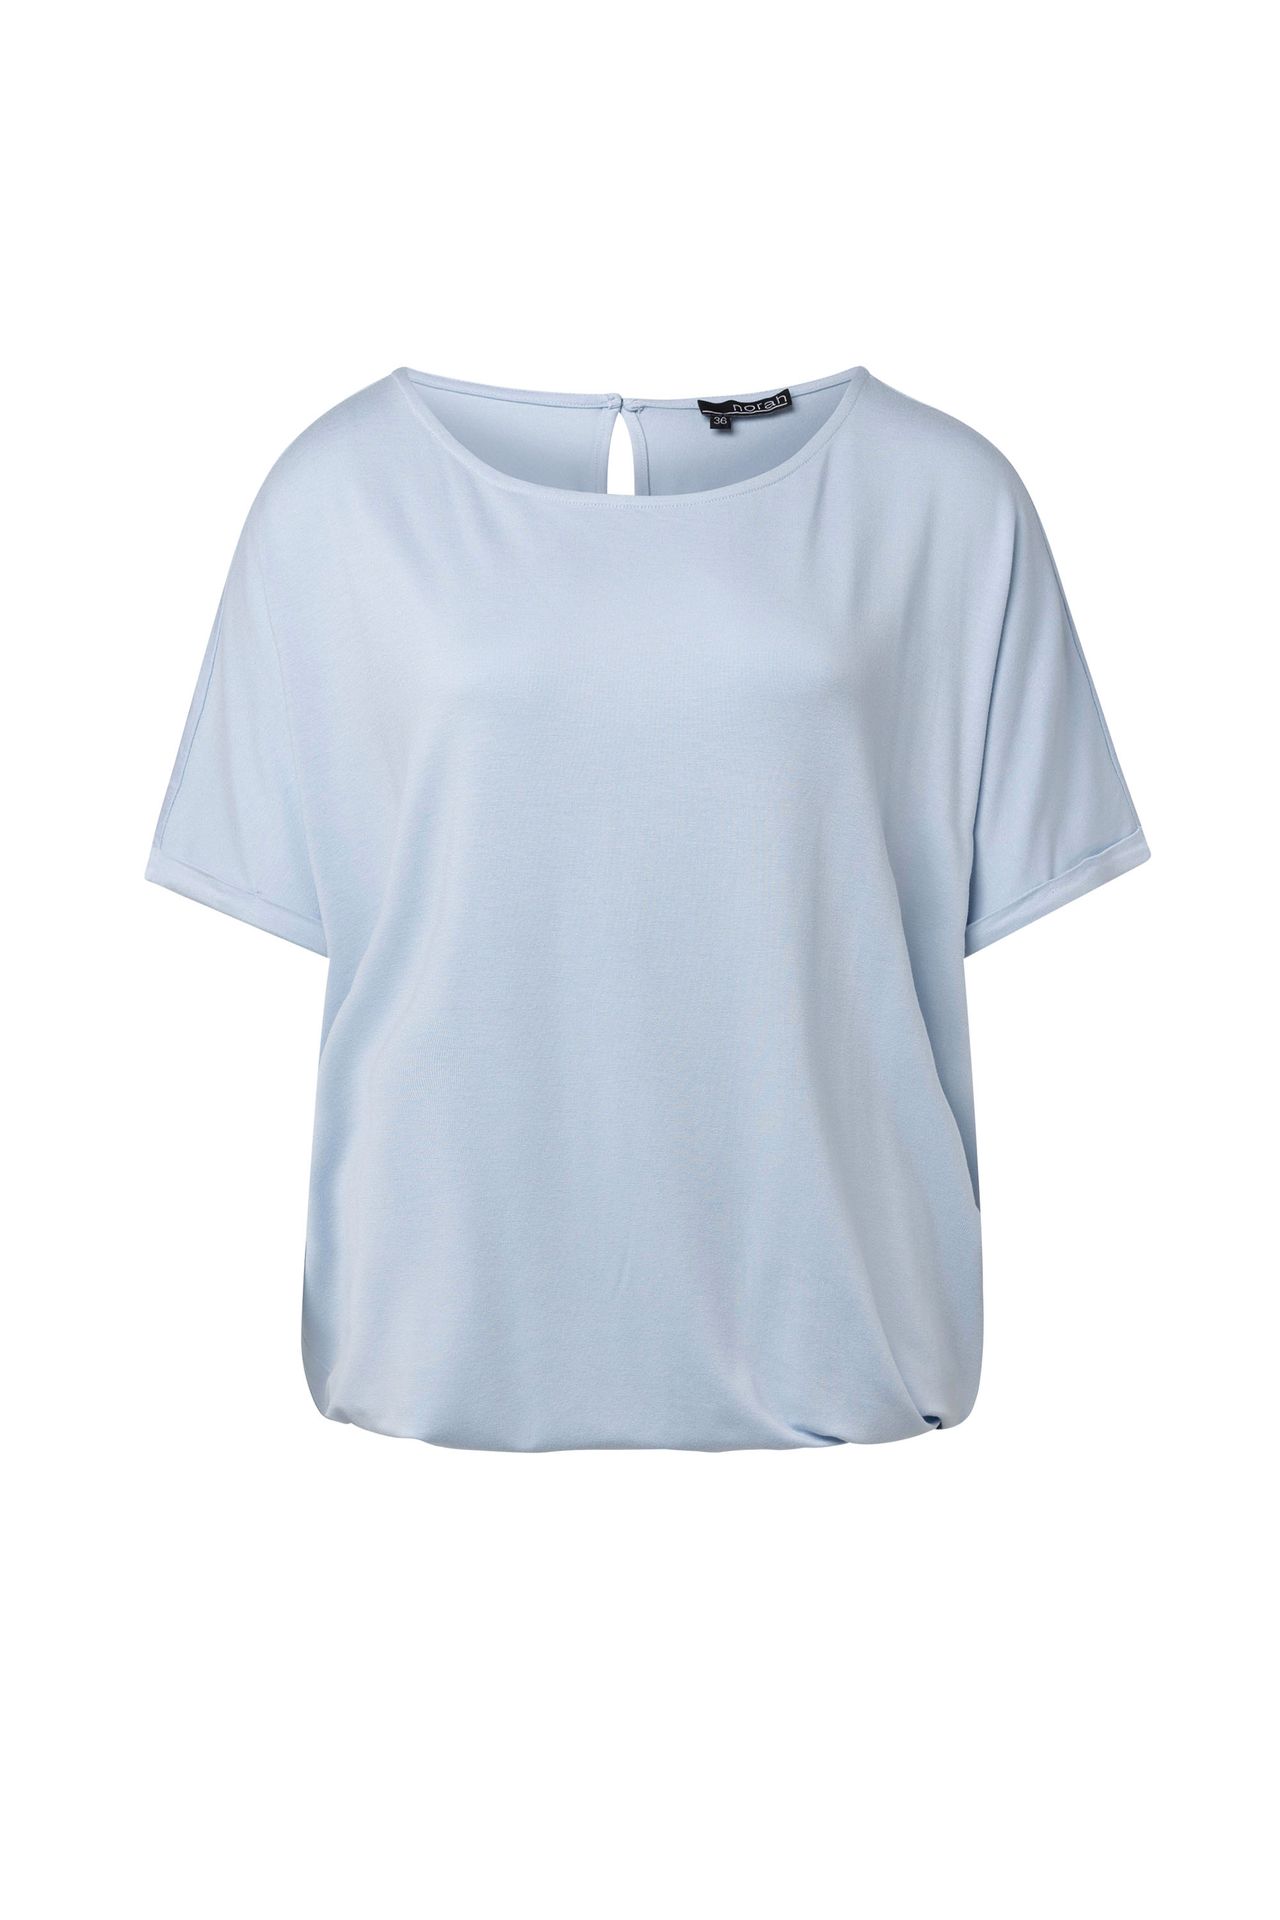 Norah Shirt pastelblauw pastel blue 215230-403